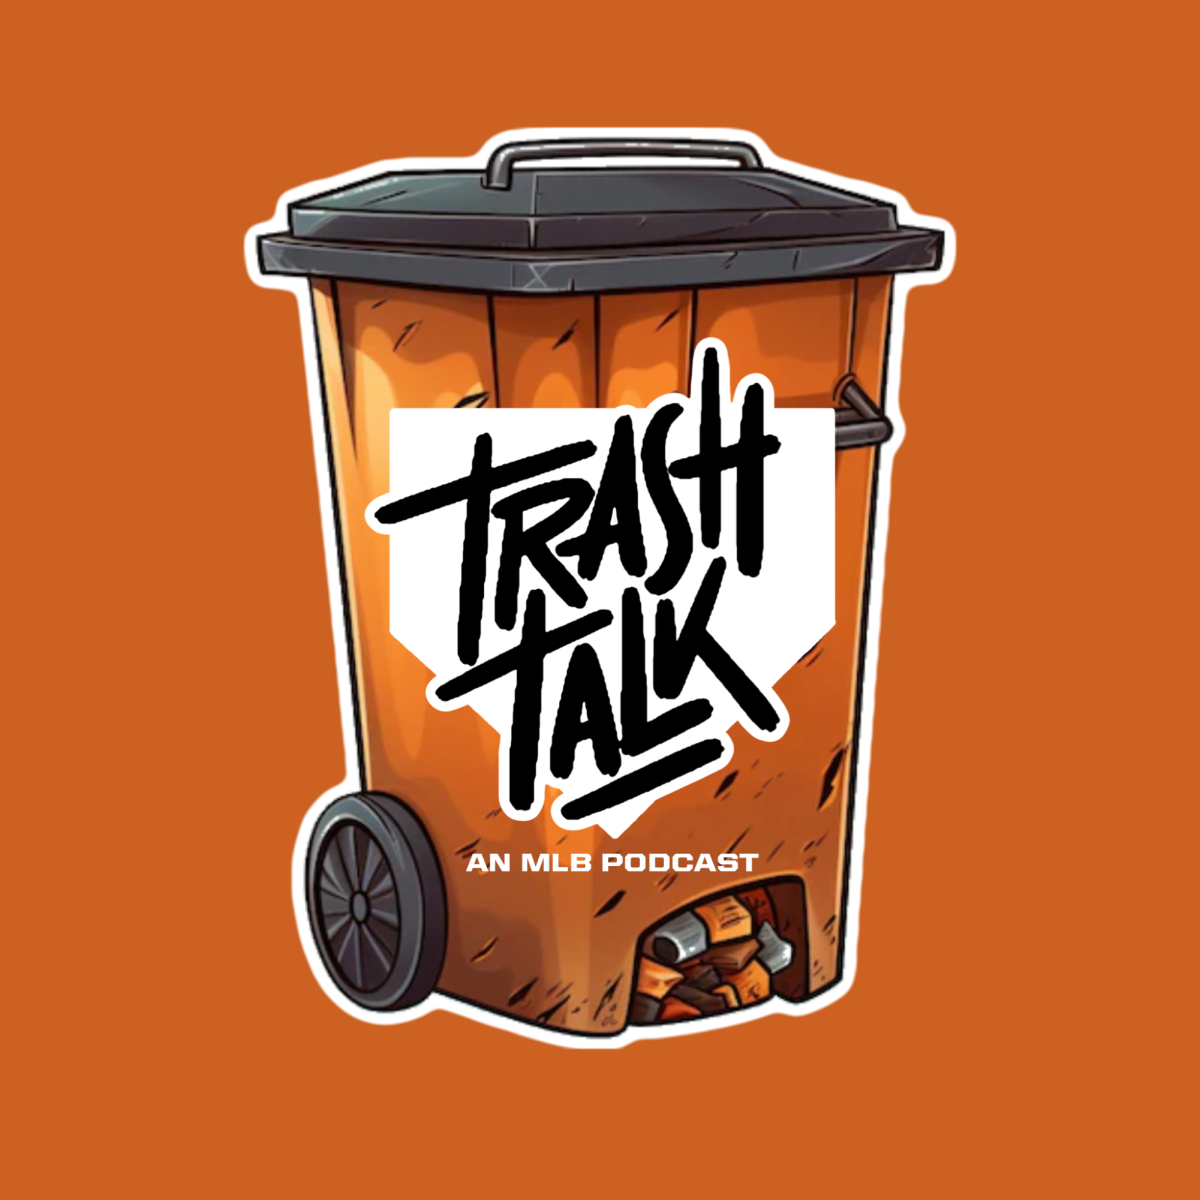 The official logo of the Trash Talk podcast. Photo credit: Joel Carpio